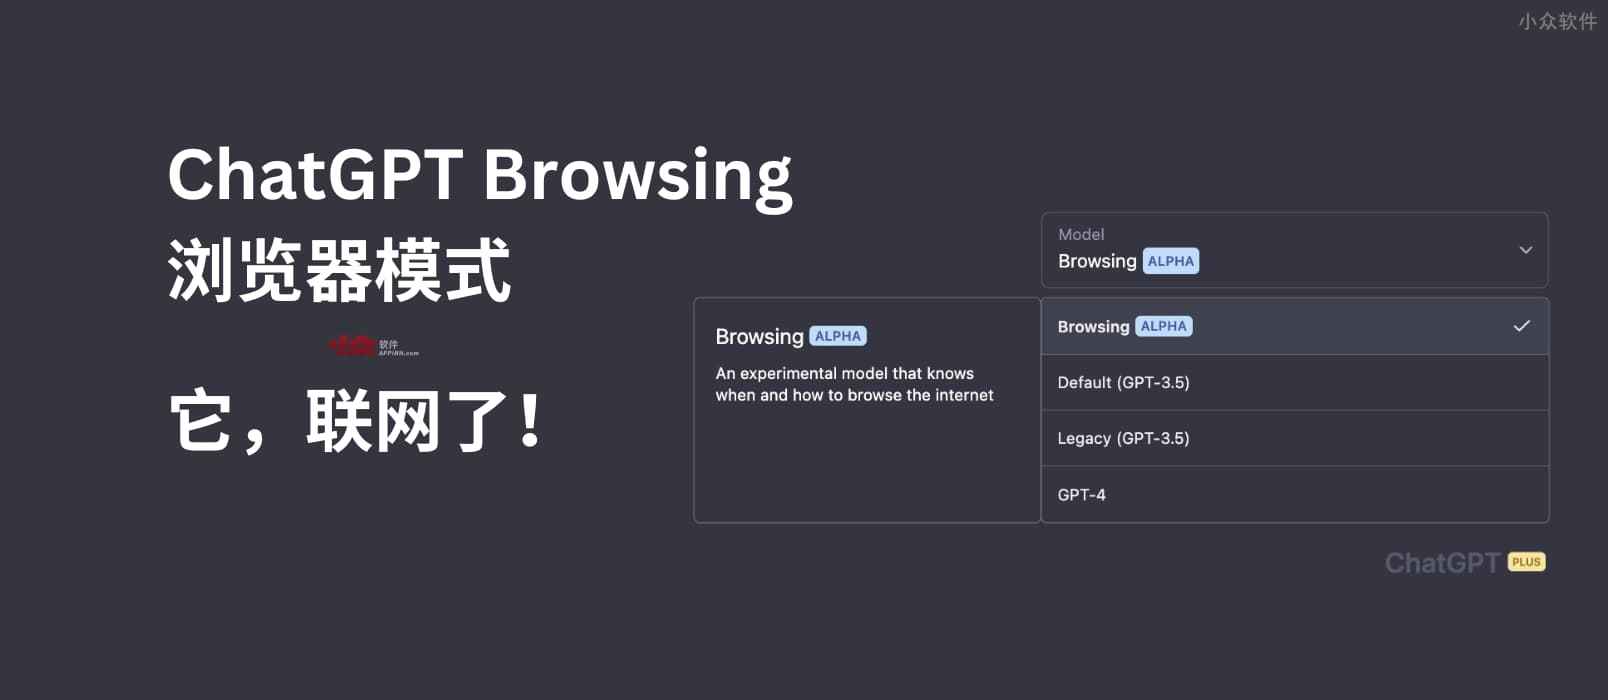 ChatGPT Browsing：浏览器模式，它，联网了！